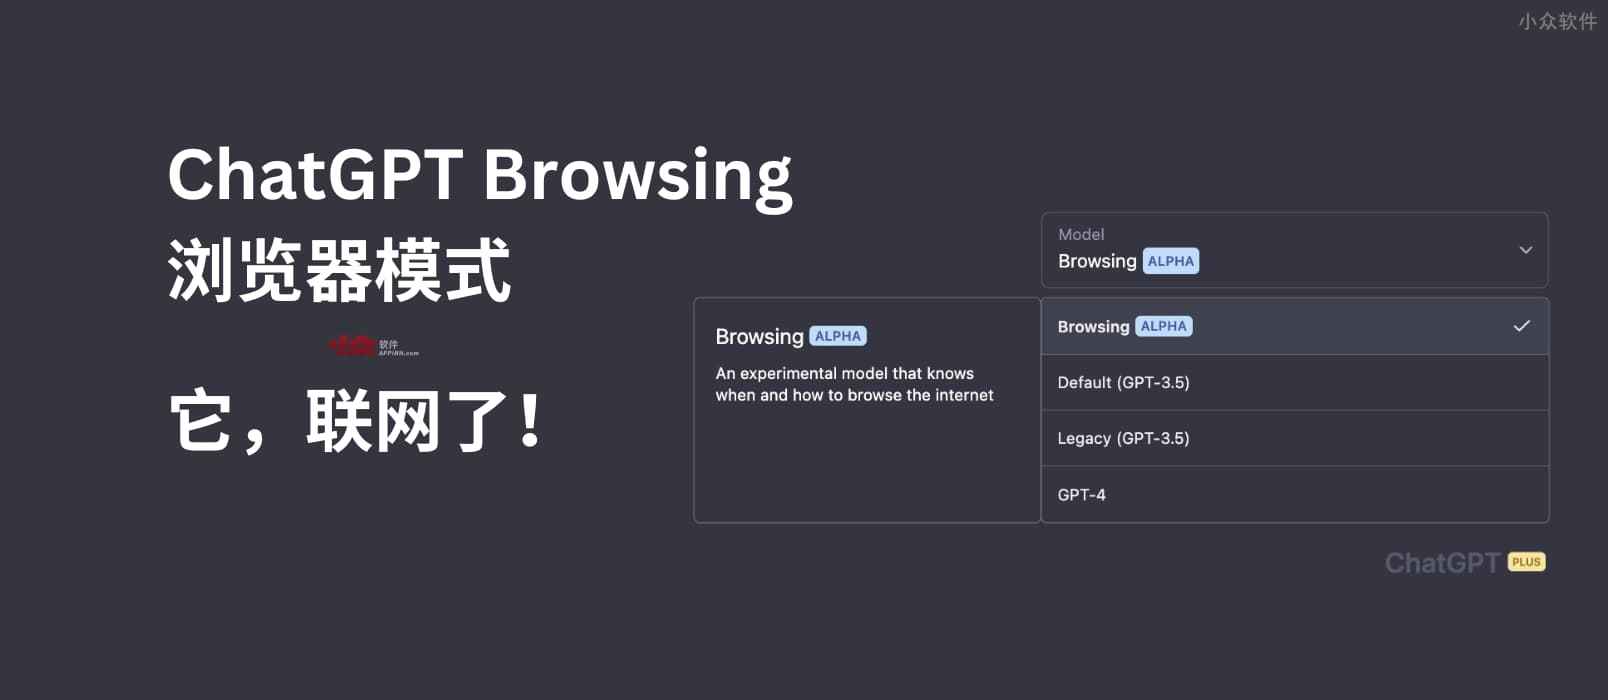 ChatGPT Browsing：浏览器模式，它，联网了！